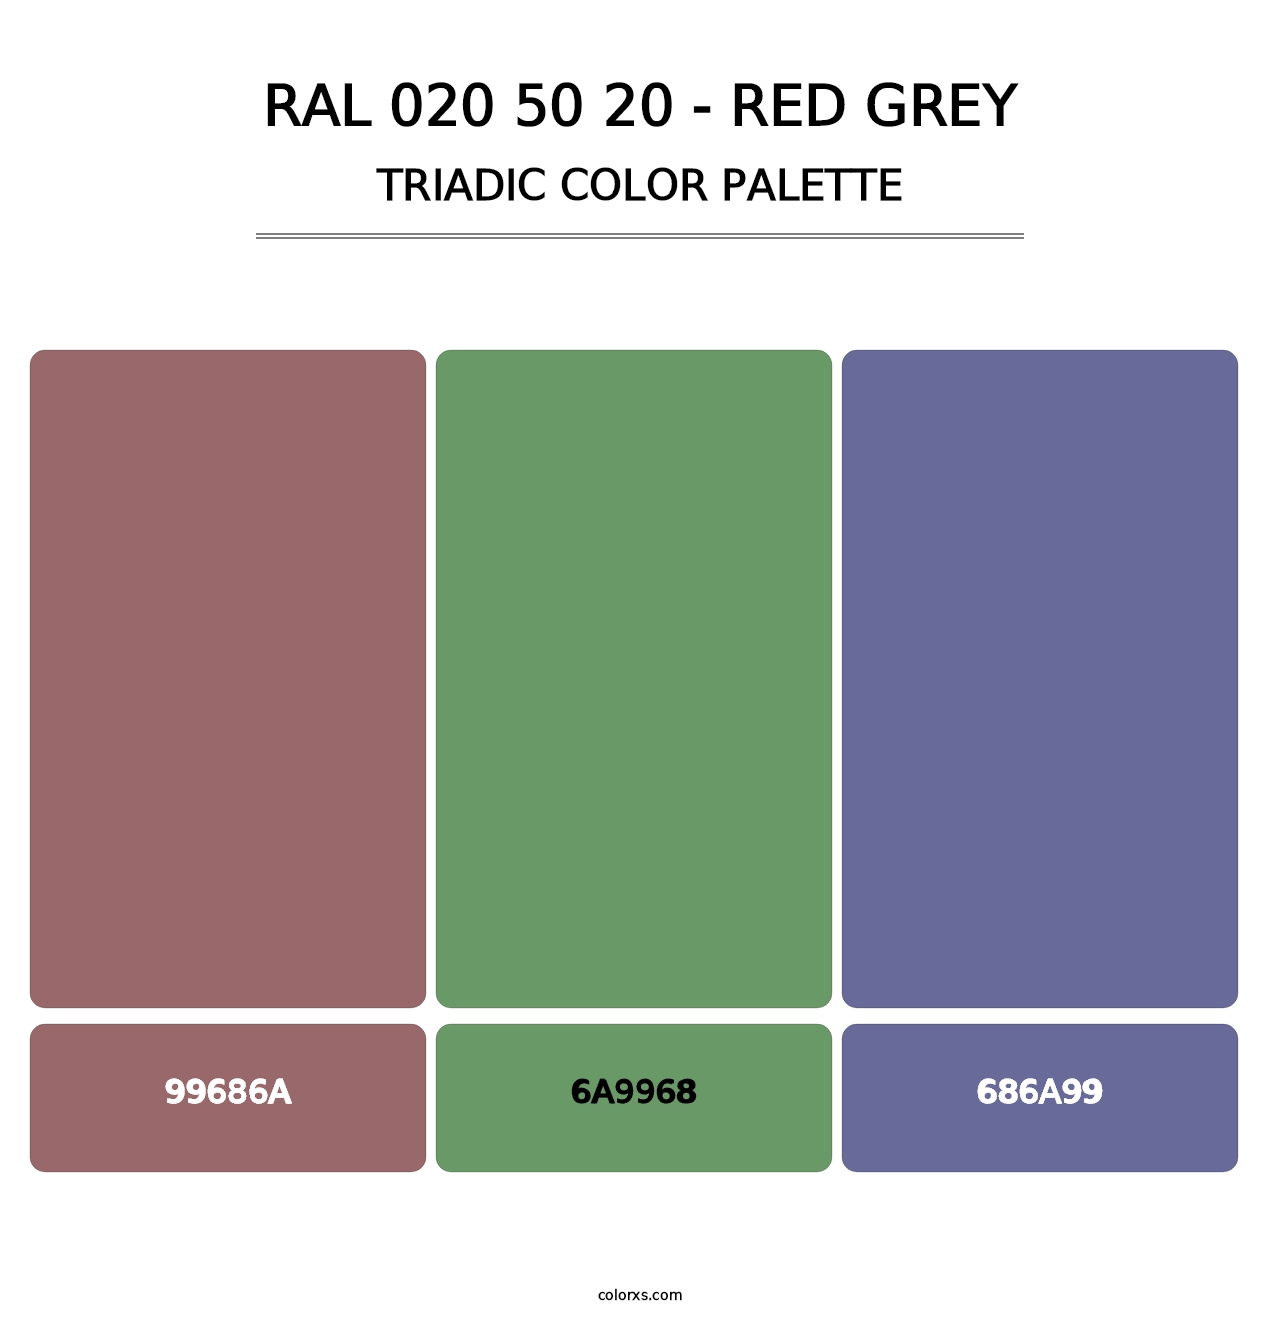 RAL 020 50 20 - Red Grey - Triadic Color Palette